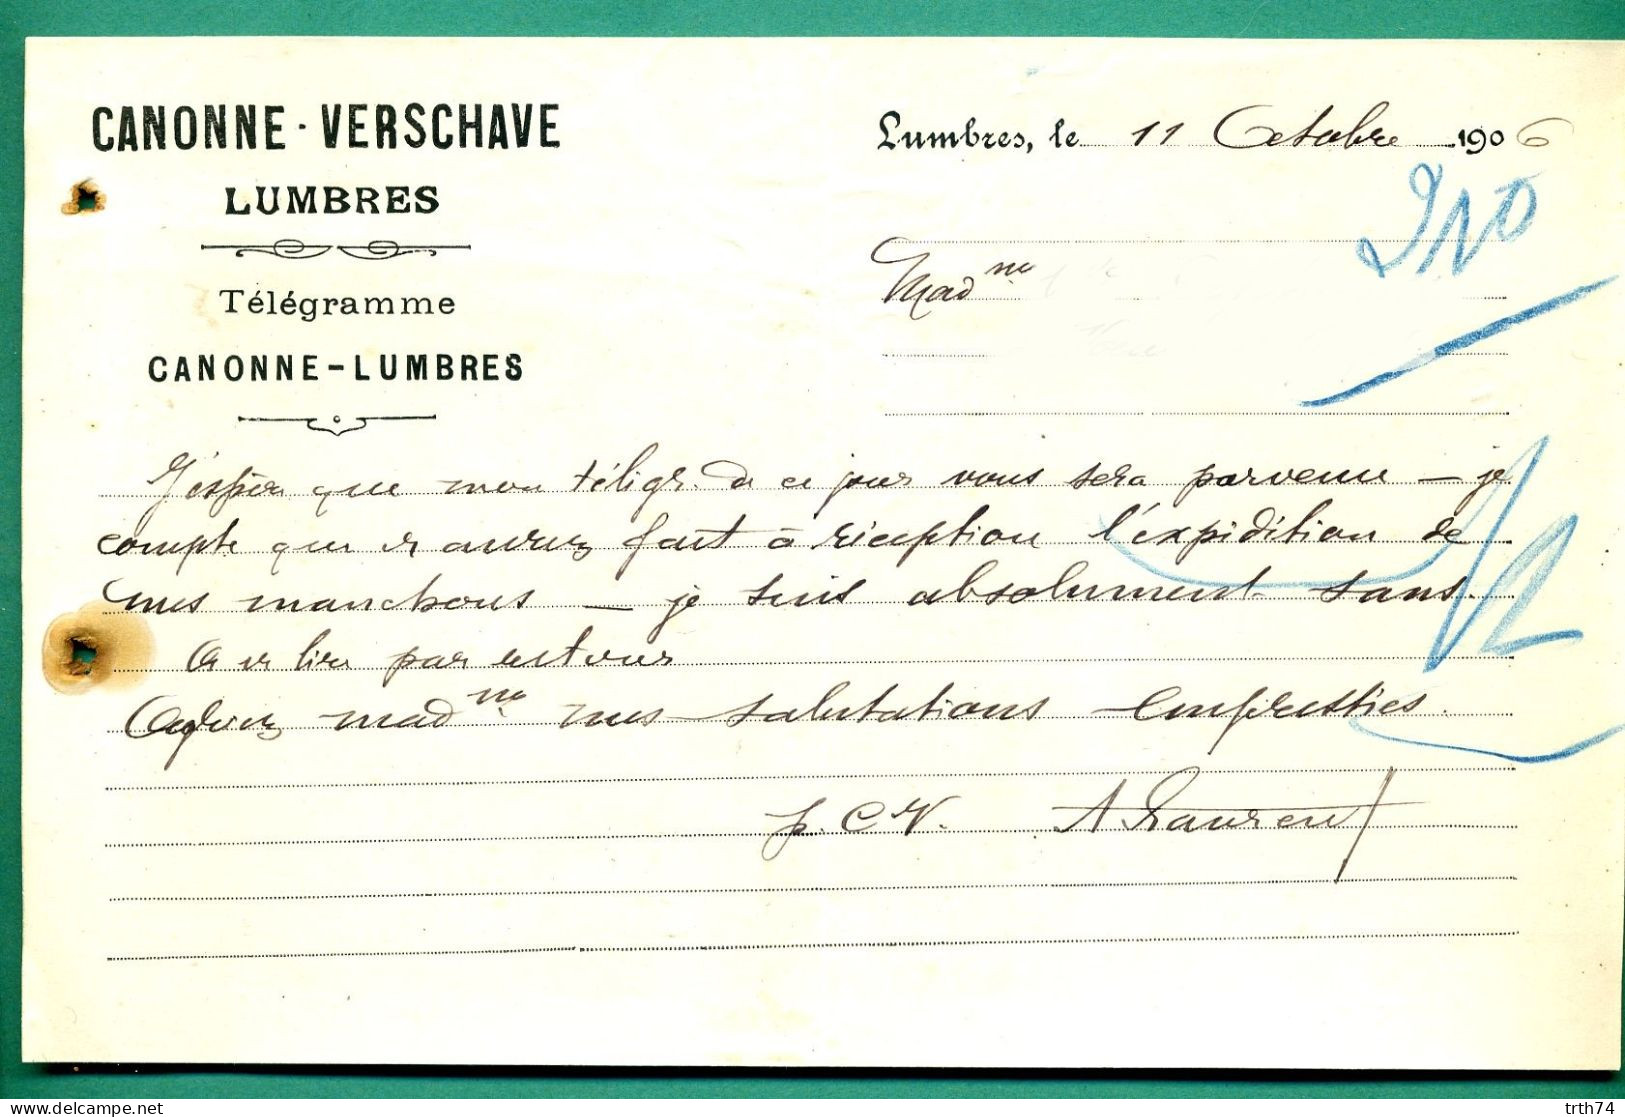 62 Lumbres Canonne Verschare 11 Octobre 1906 - Stamperia & Cartoleria